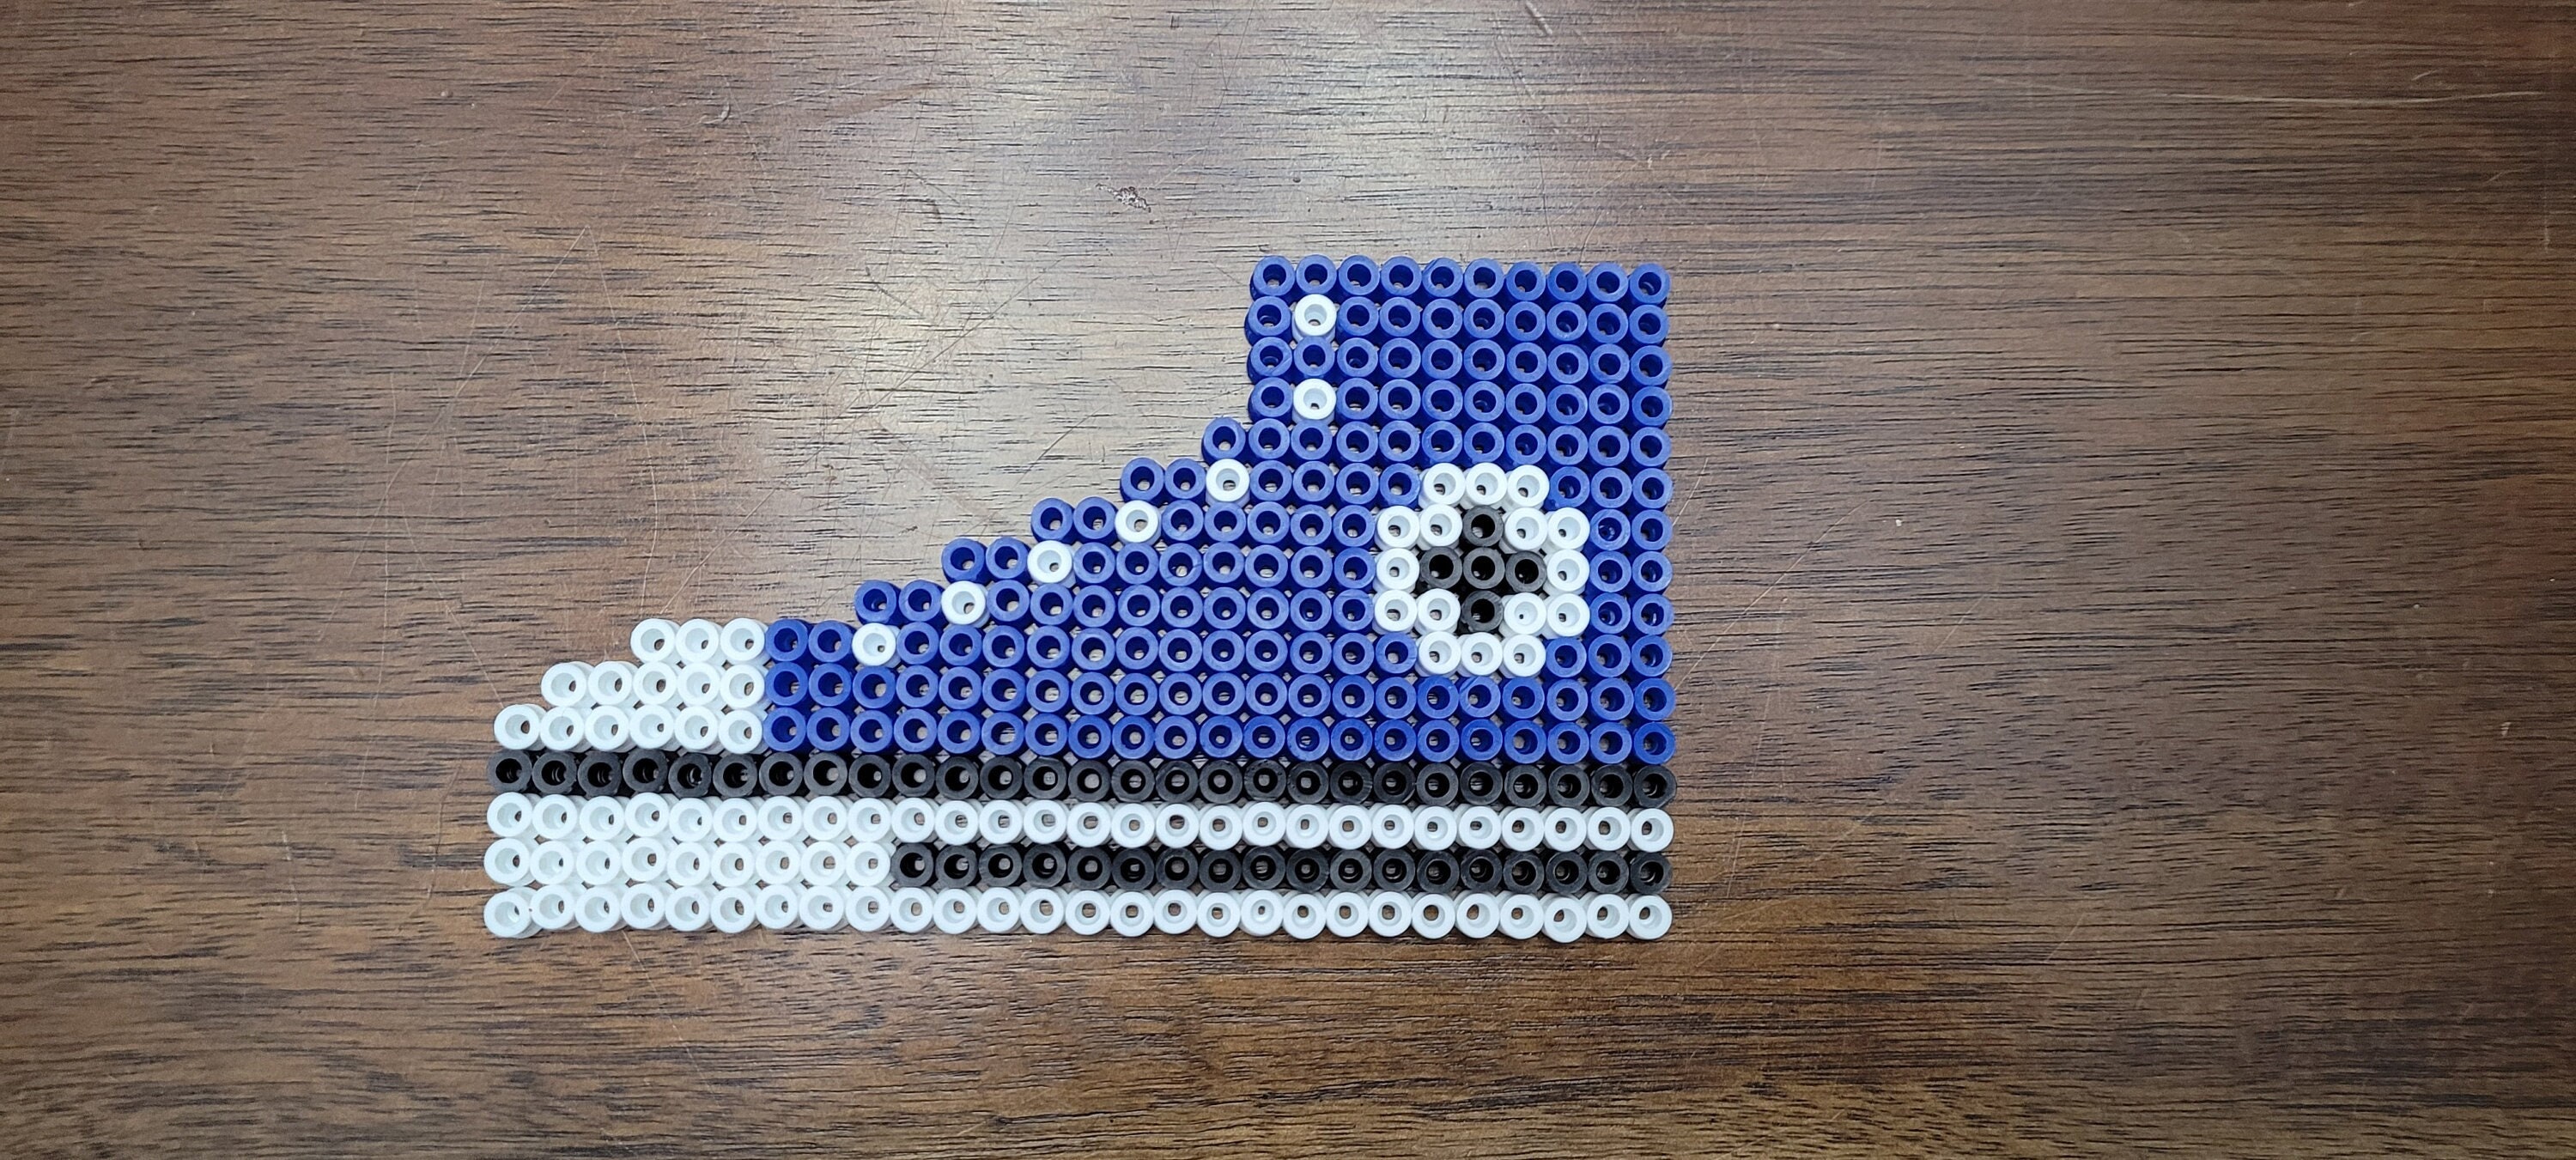 Venta ambulante Atravesar Ajustable Blue Converse Shoe Perler Beads - Etsy